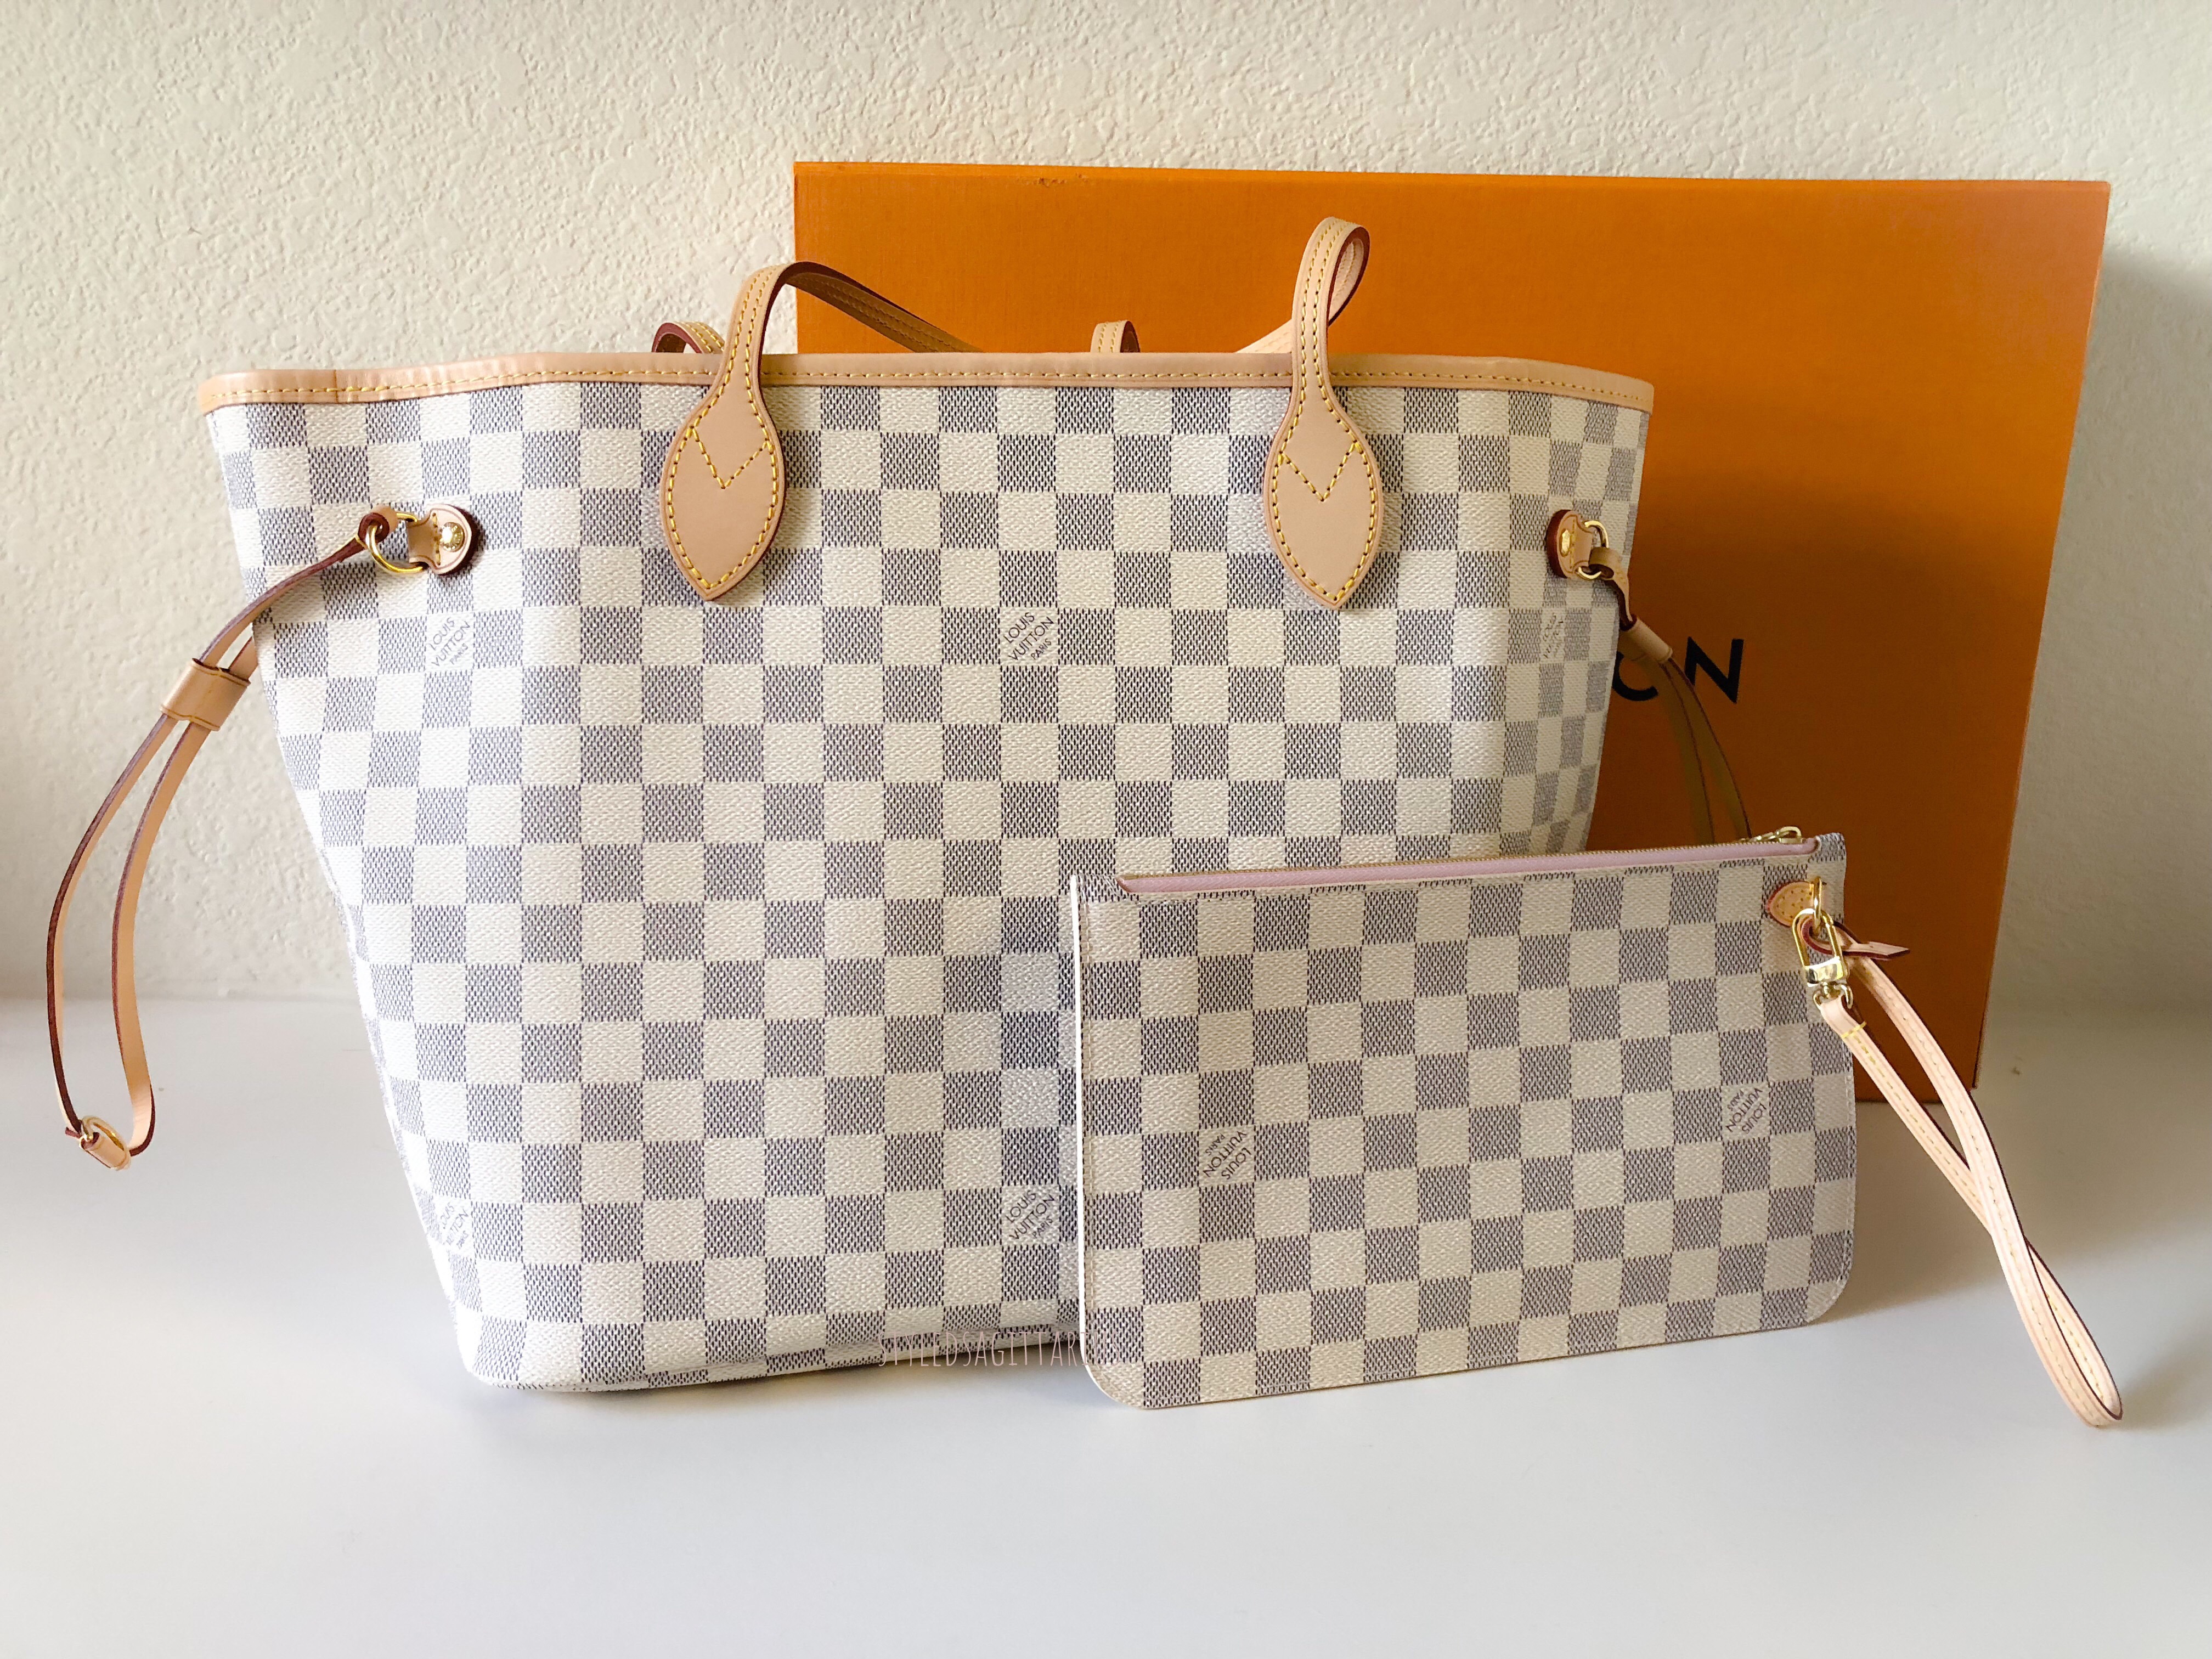 Bag Reveal: Louis Vuitton Neverfull MM - Damier Azur (Rose